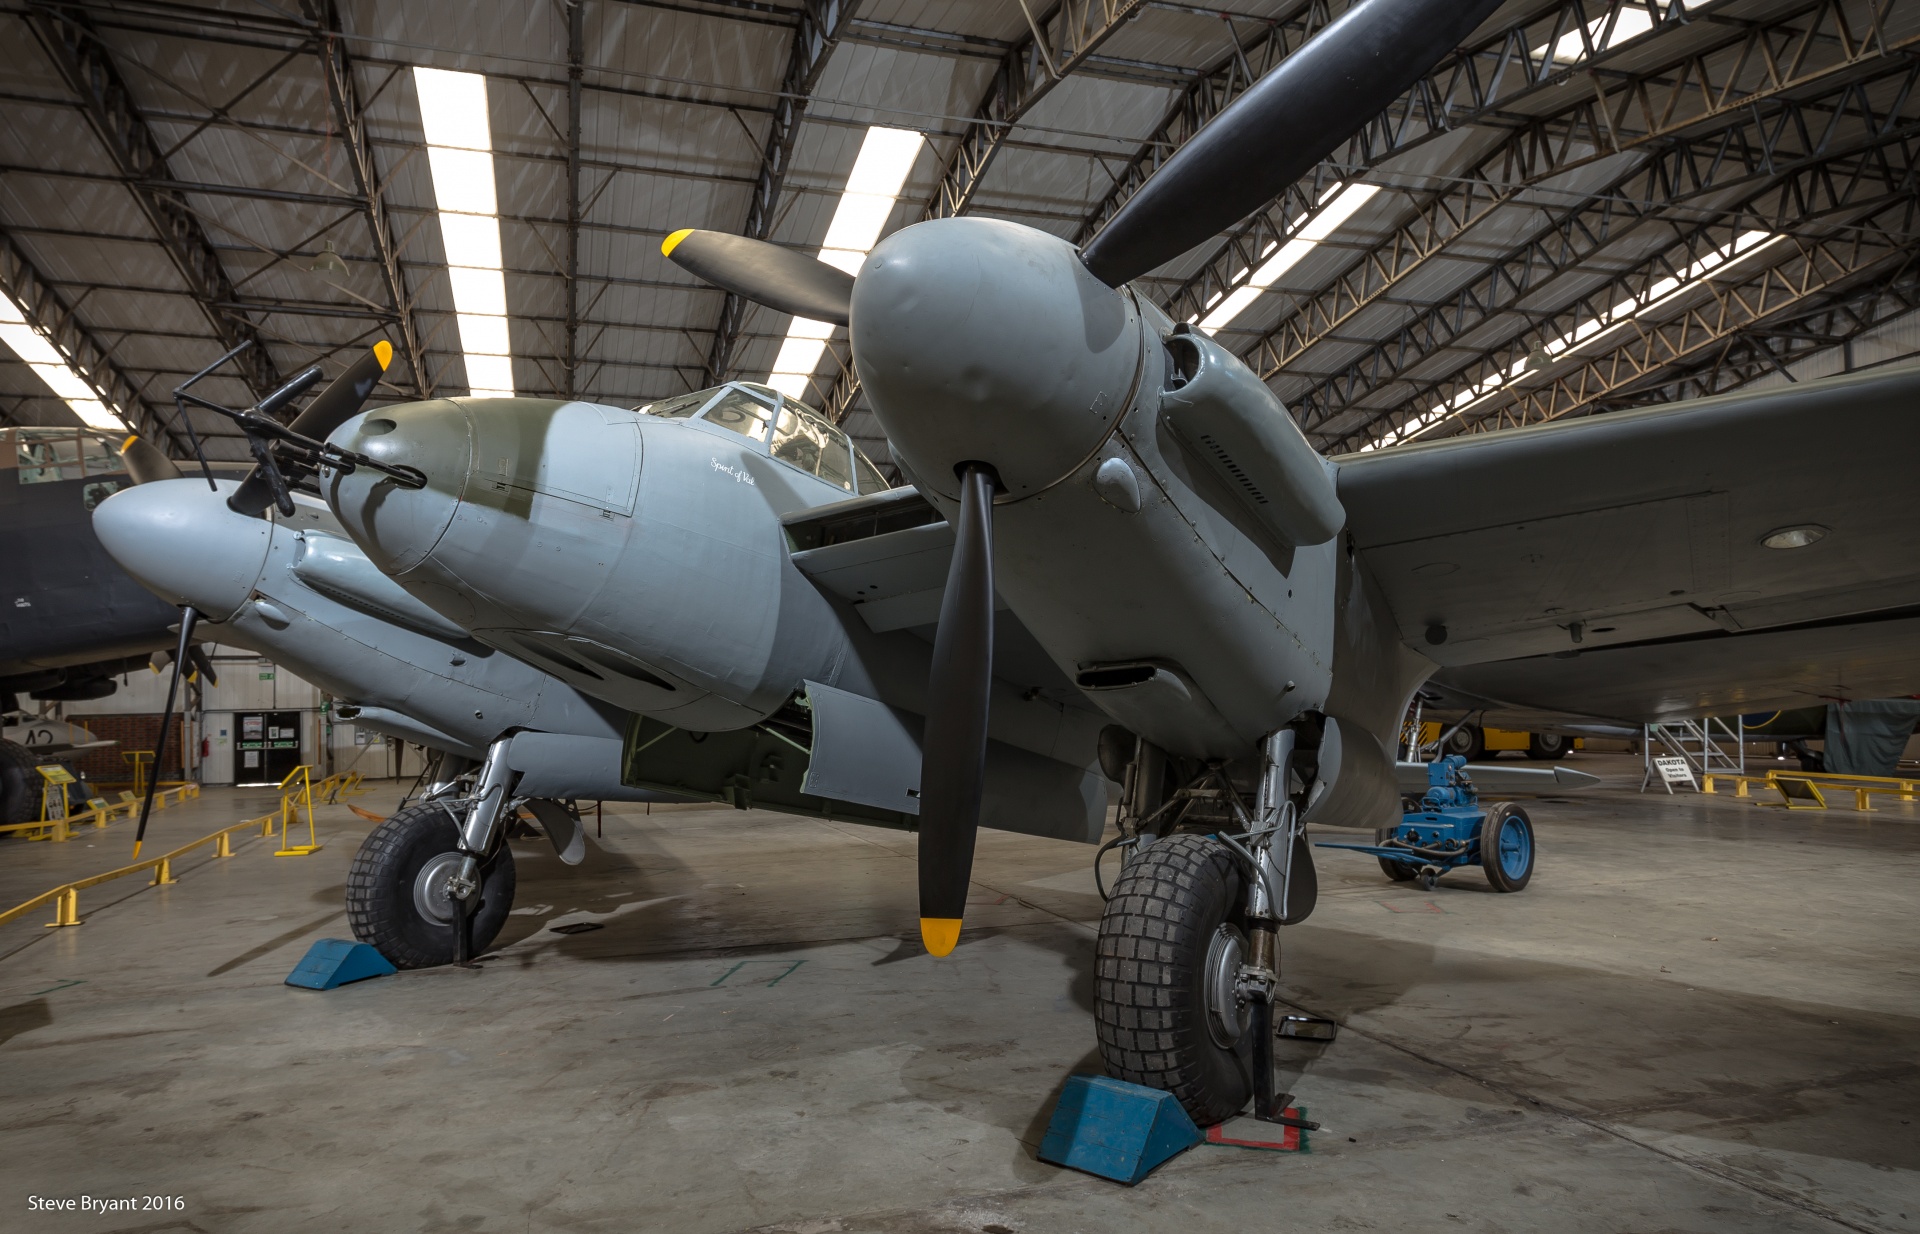 A restored De Havilland Mosquito at the Elvington Air Museum near York in the UK